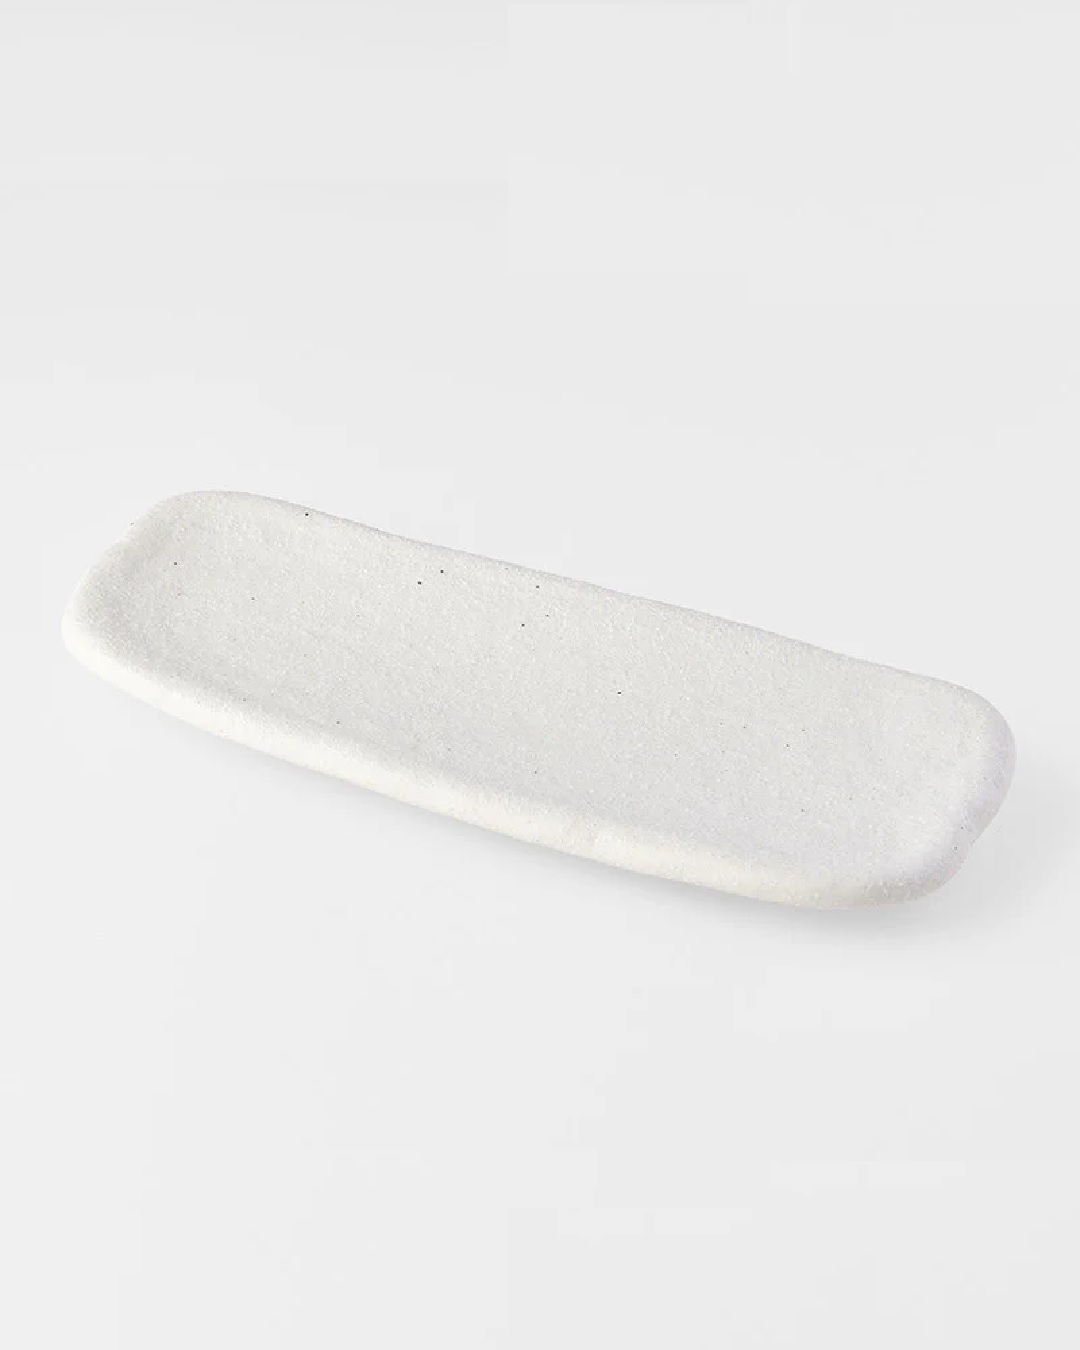 Shell white long rectangle slab or sushi plate